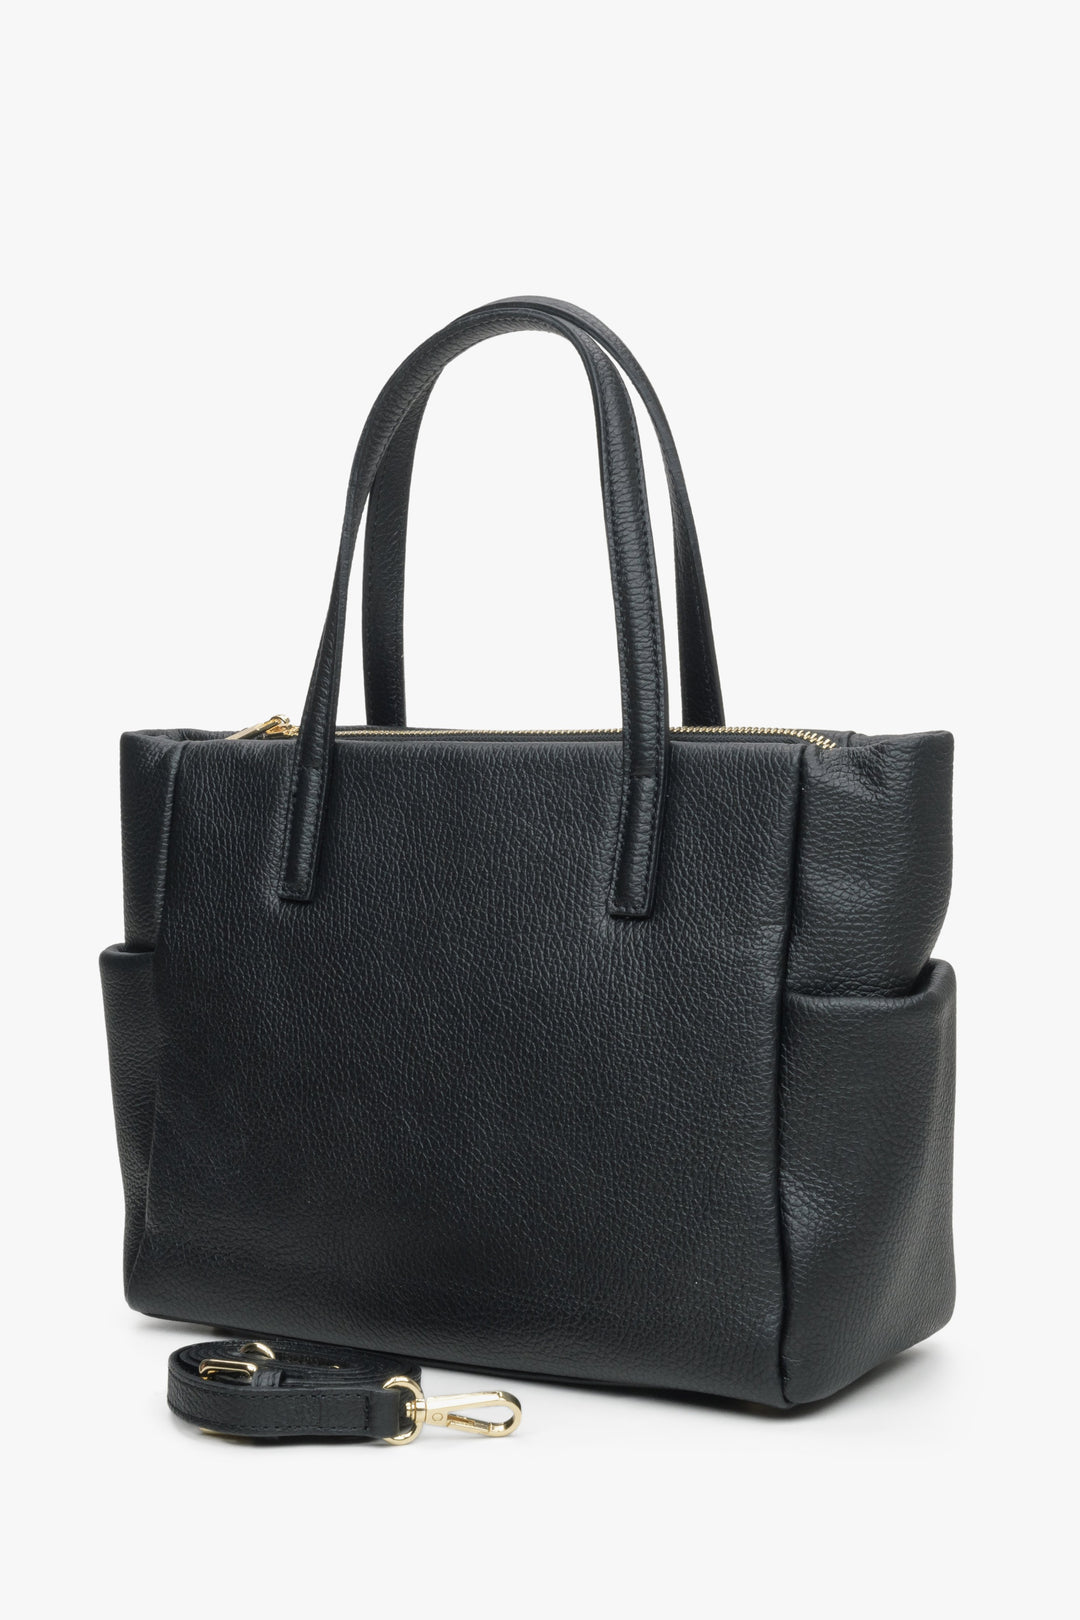 Women's black leather handbag made of Italian genuine leather by Estro.